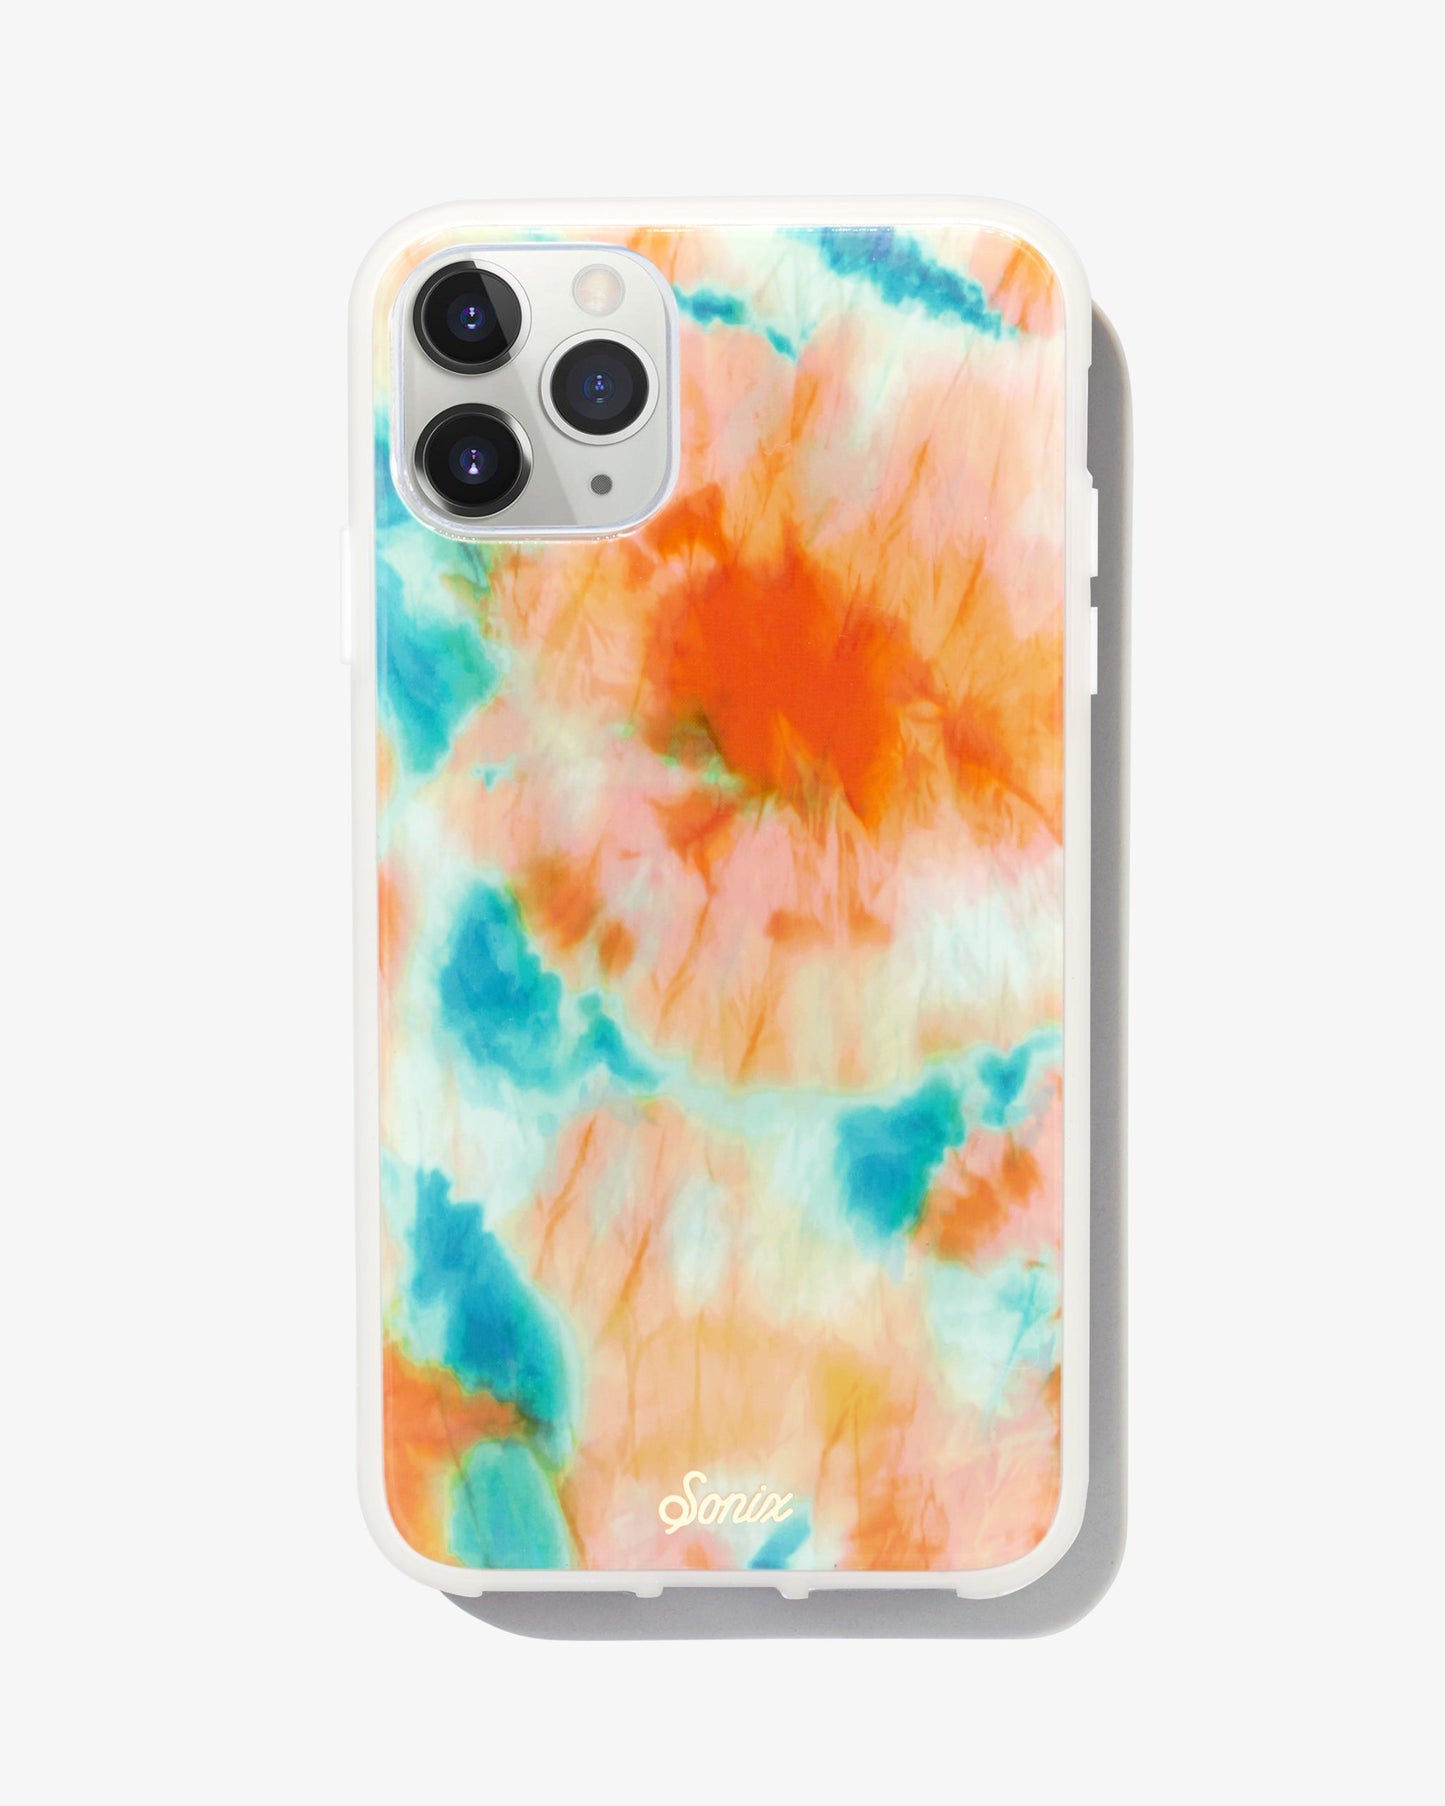 Orange Glow iPhone Case